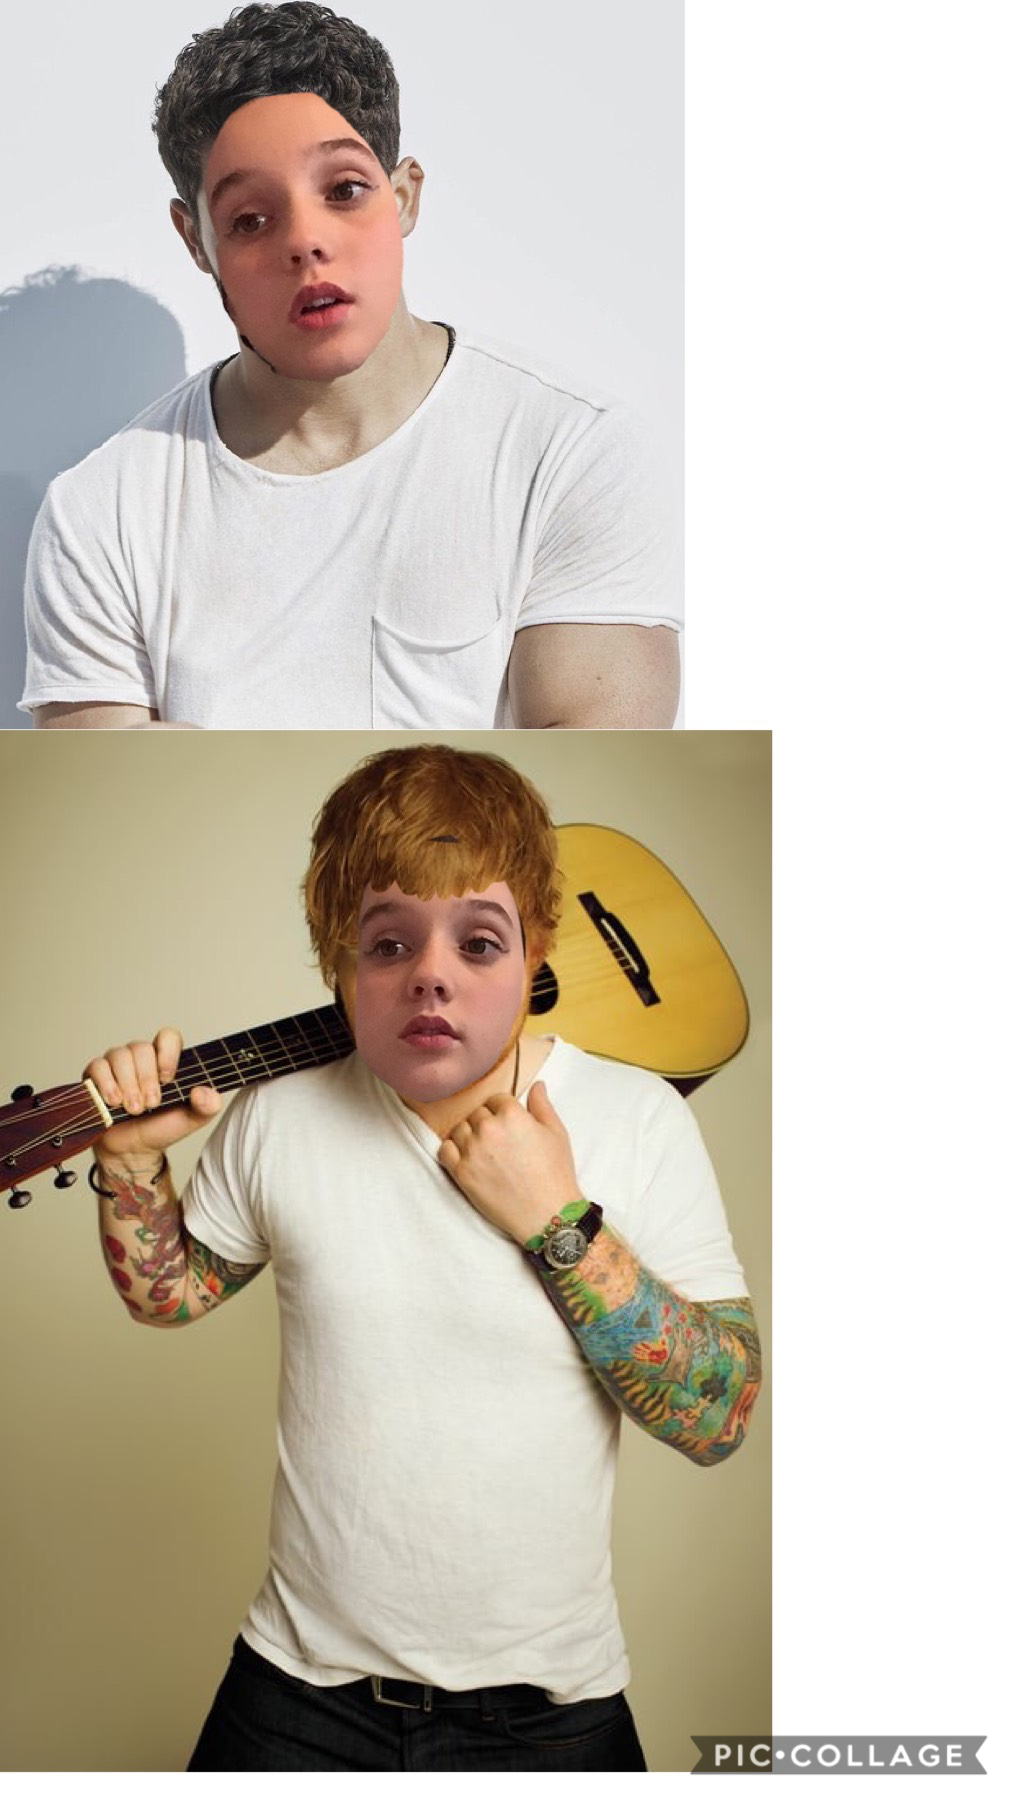 I look just like Nick Jonas and Ed Sheeran 😂